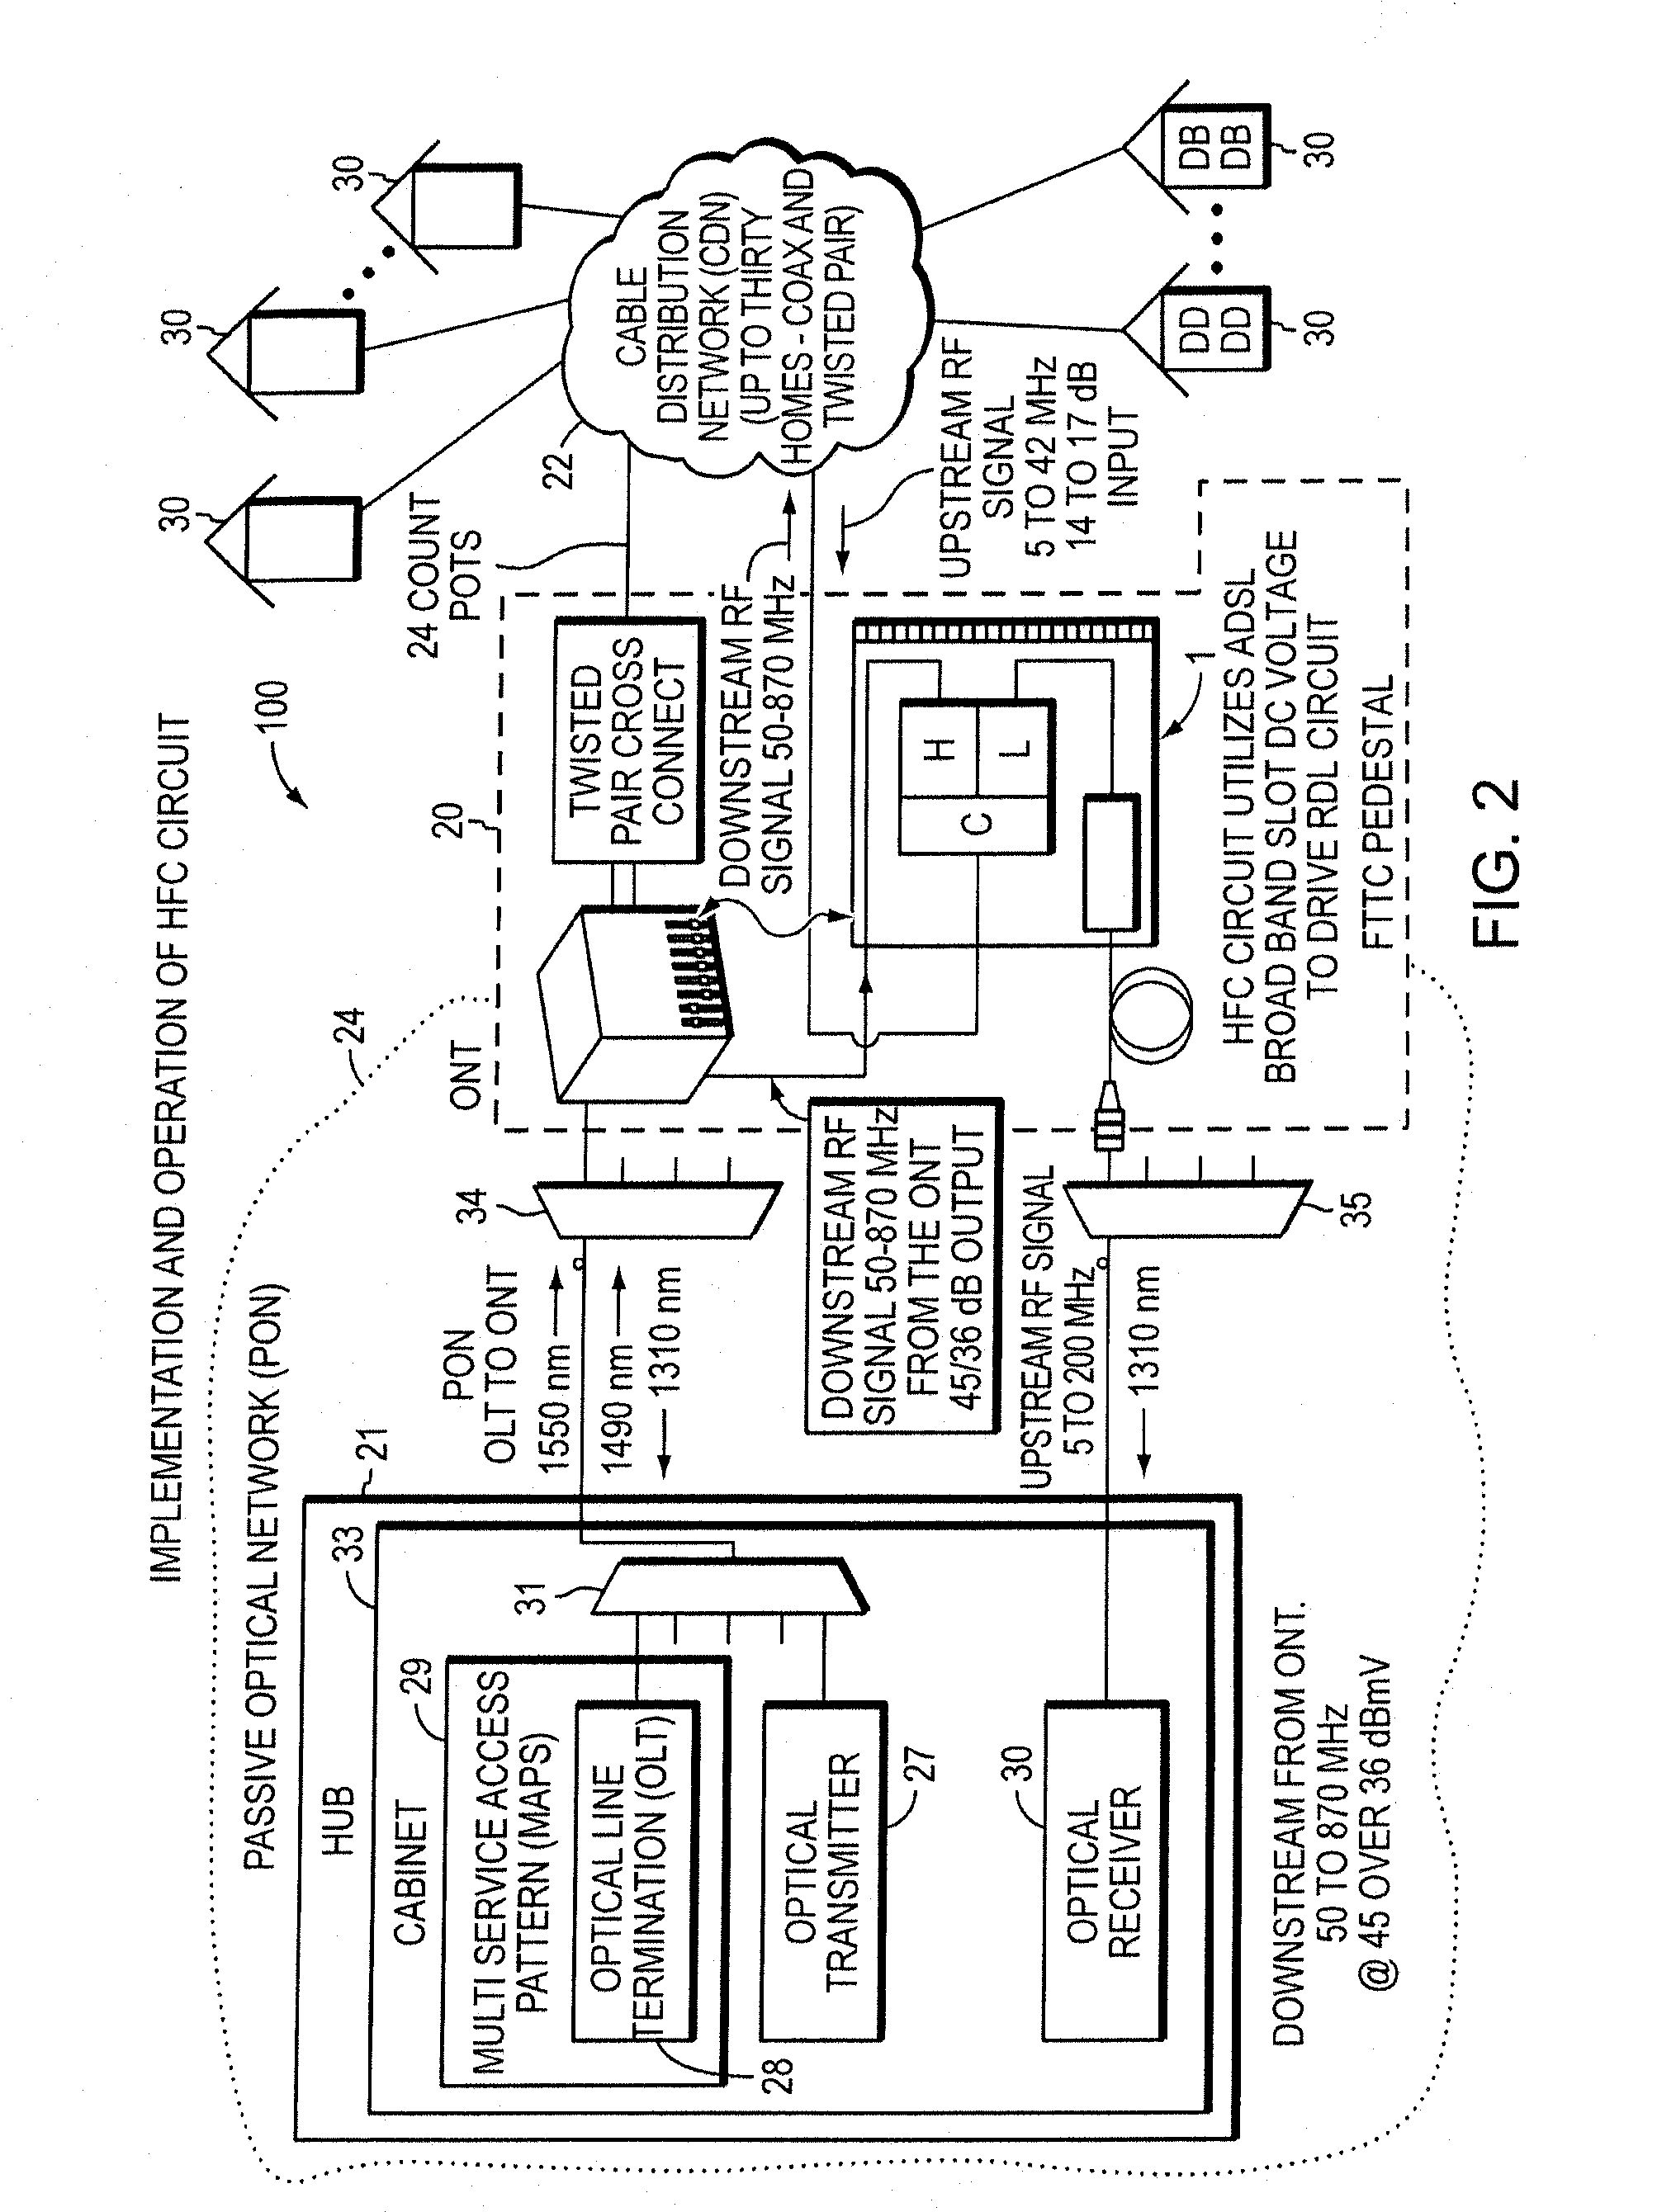 Hybrid fiber coax (HFC) circuit